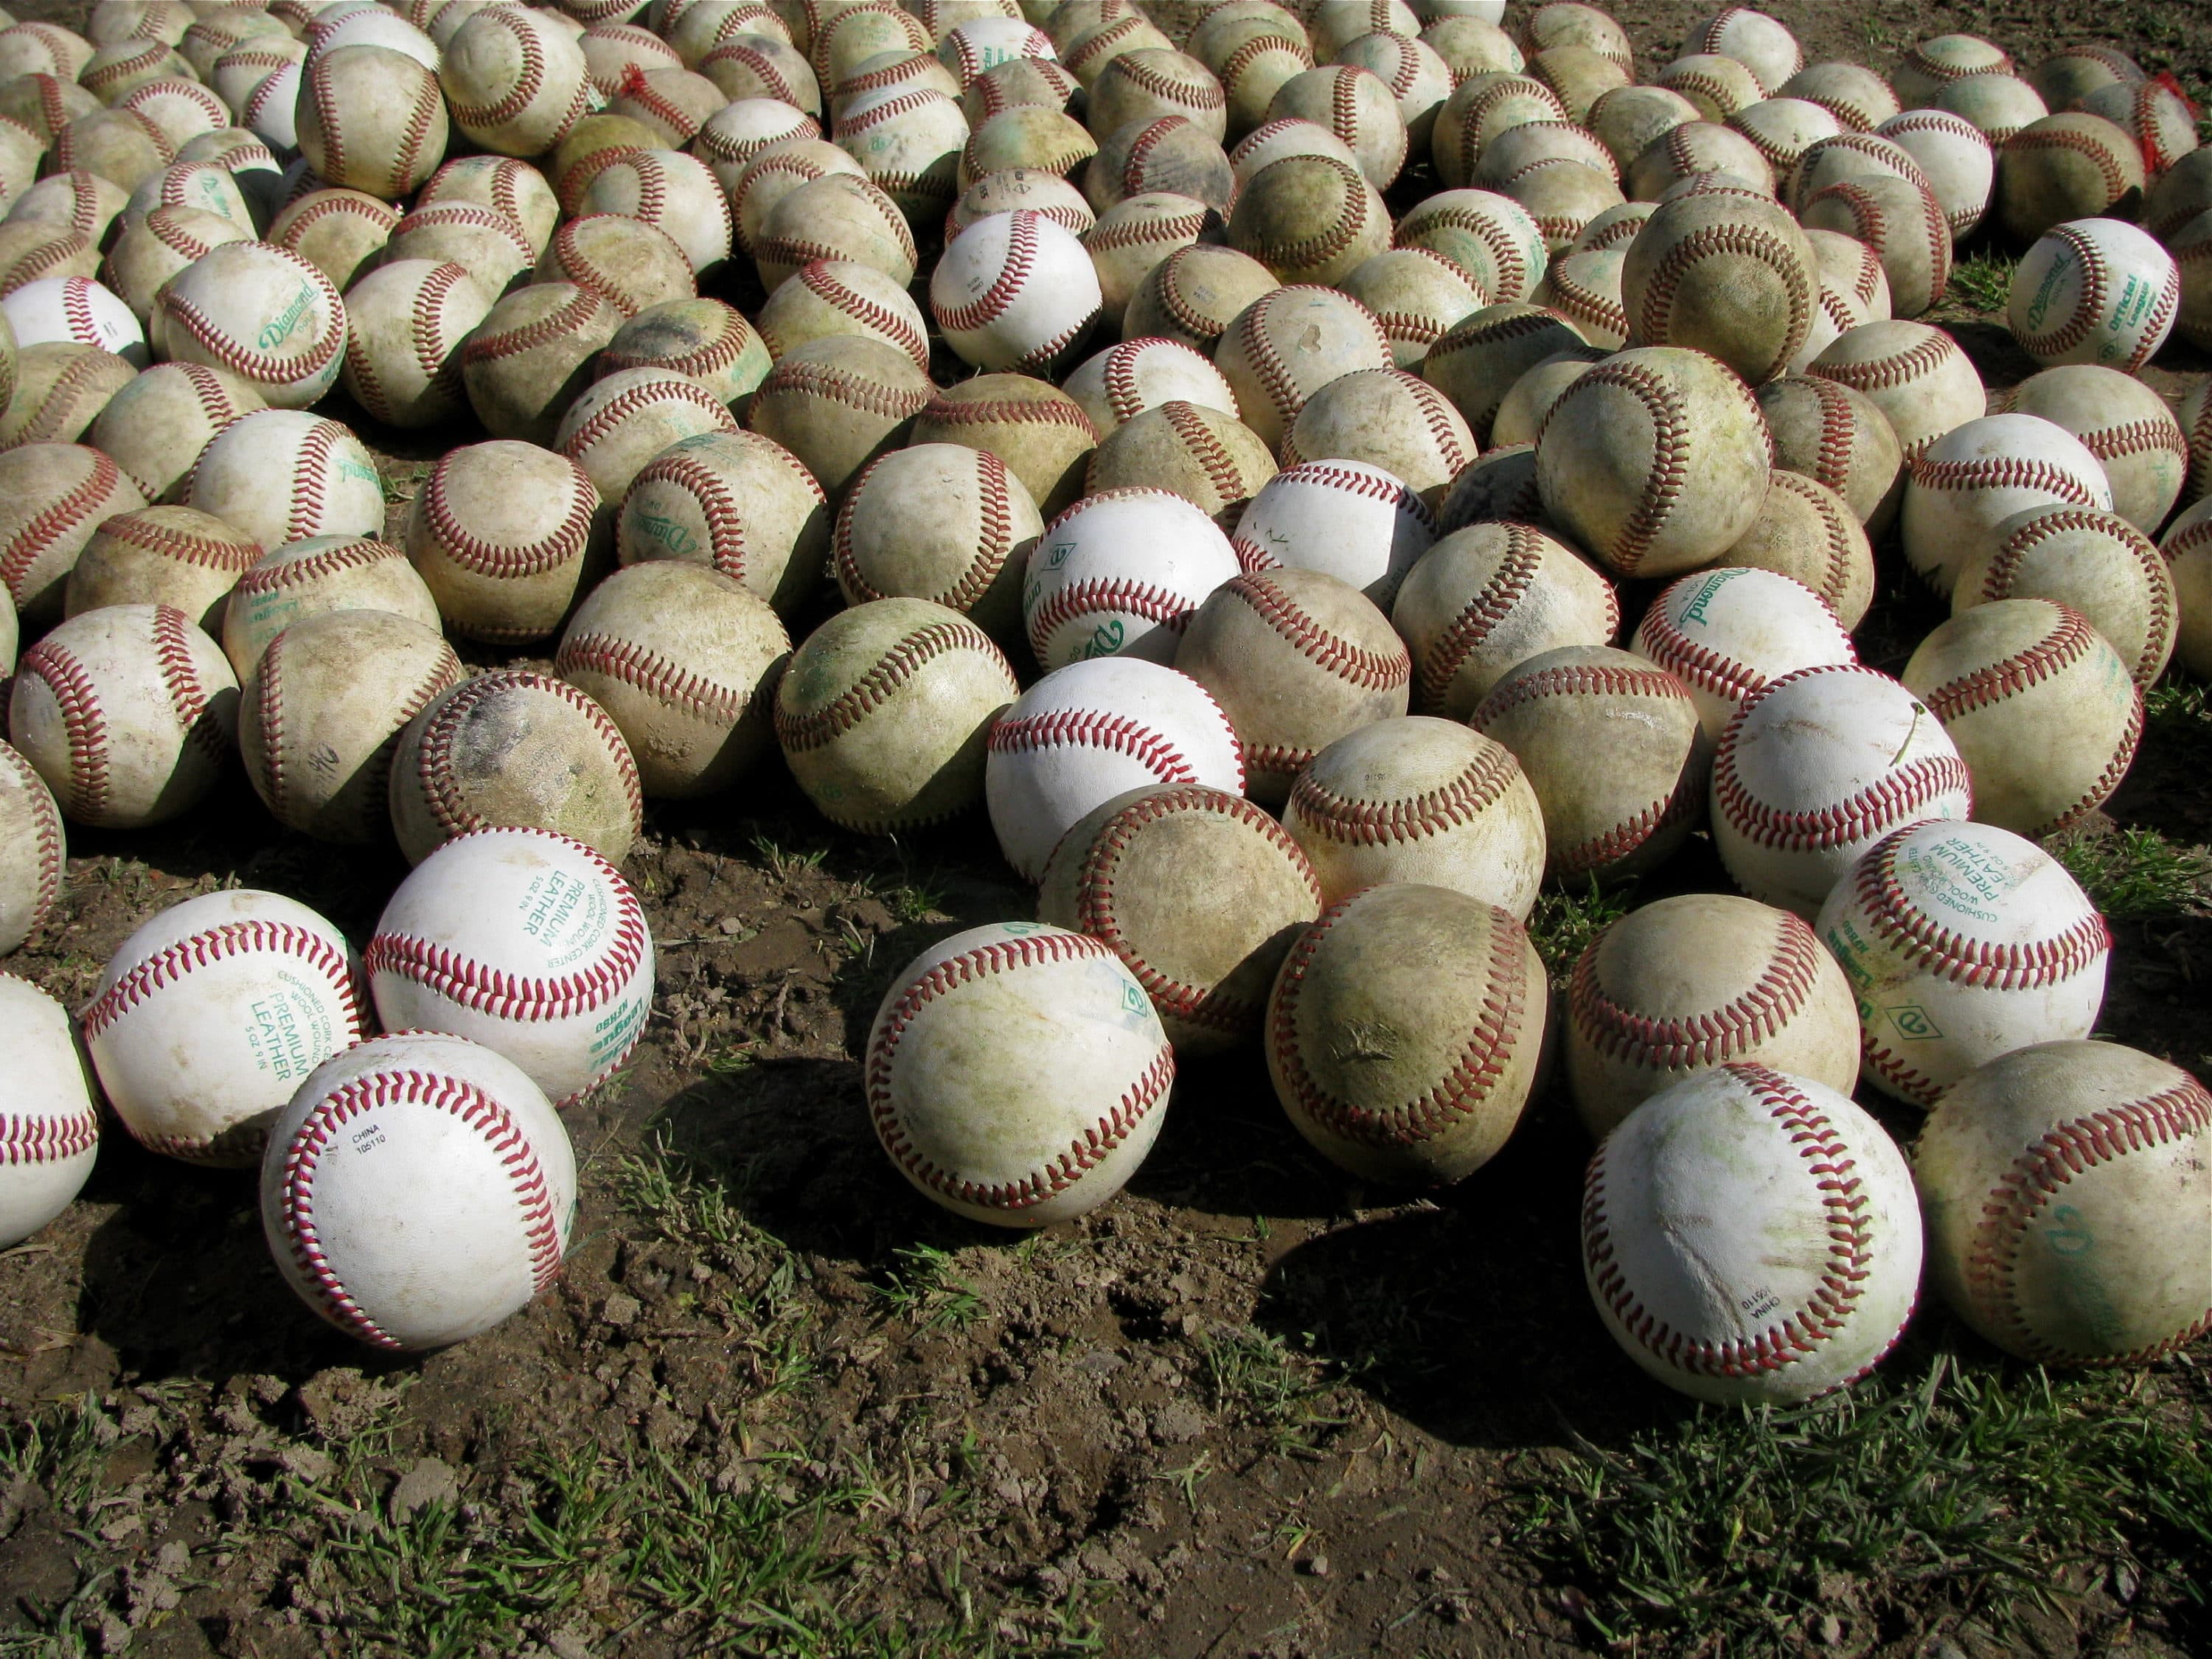 A collection of baseballs. (Sharon Brody/WBUR)